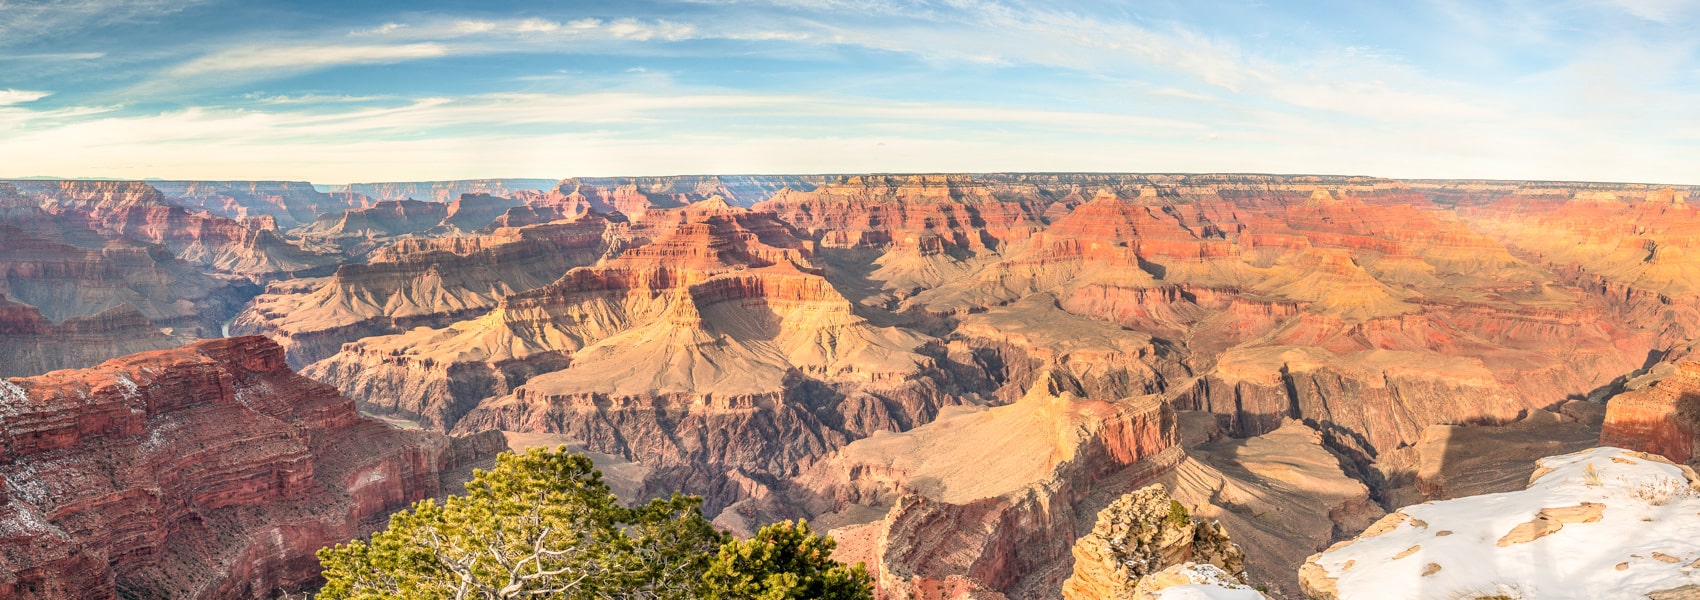 Où dormir au Grand Canyon ?